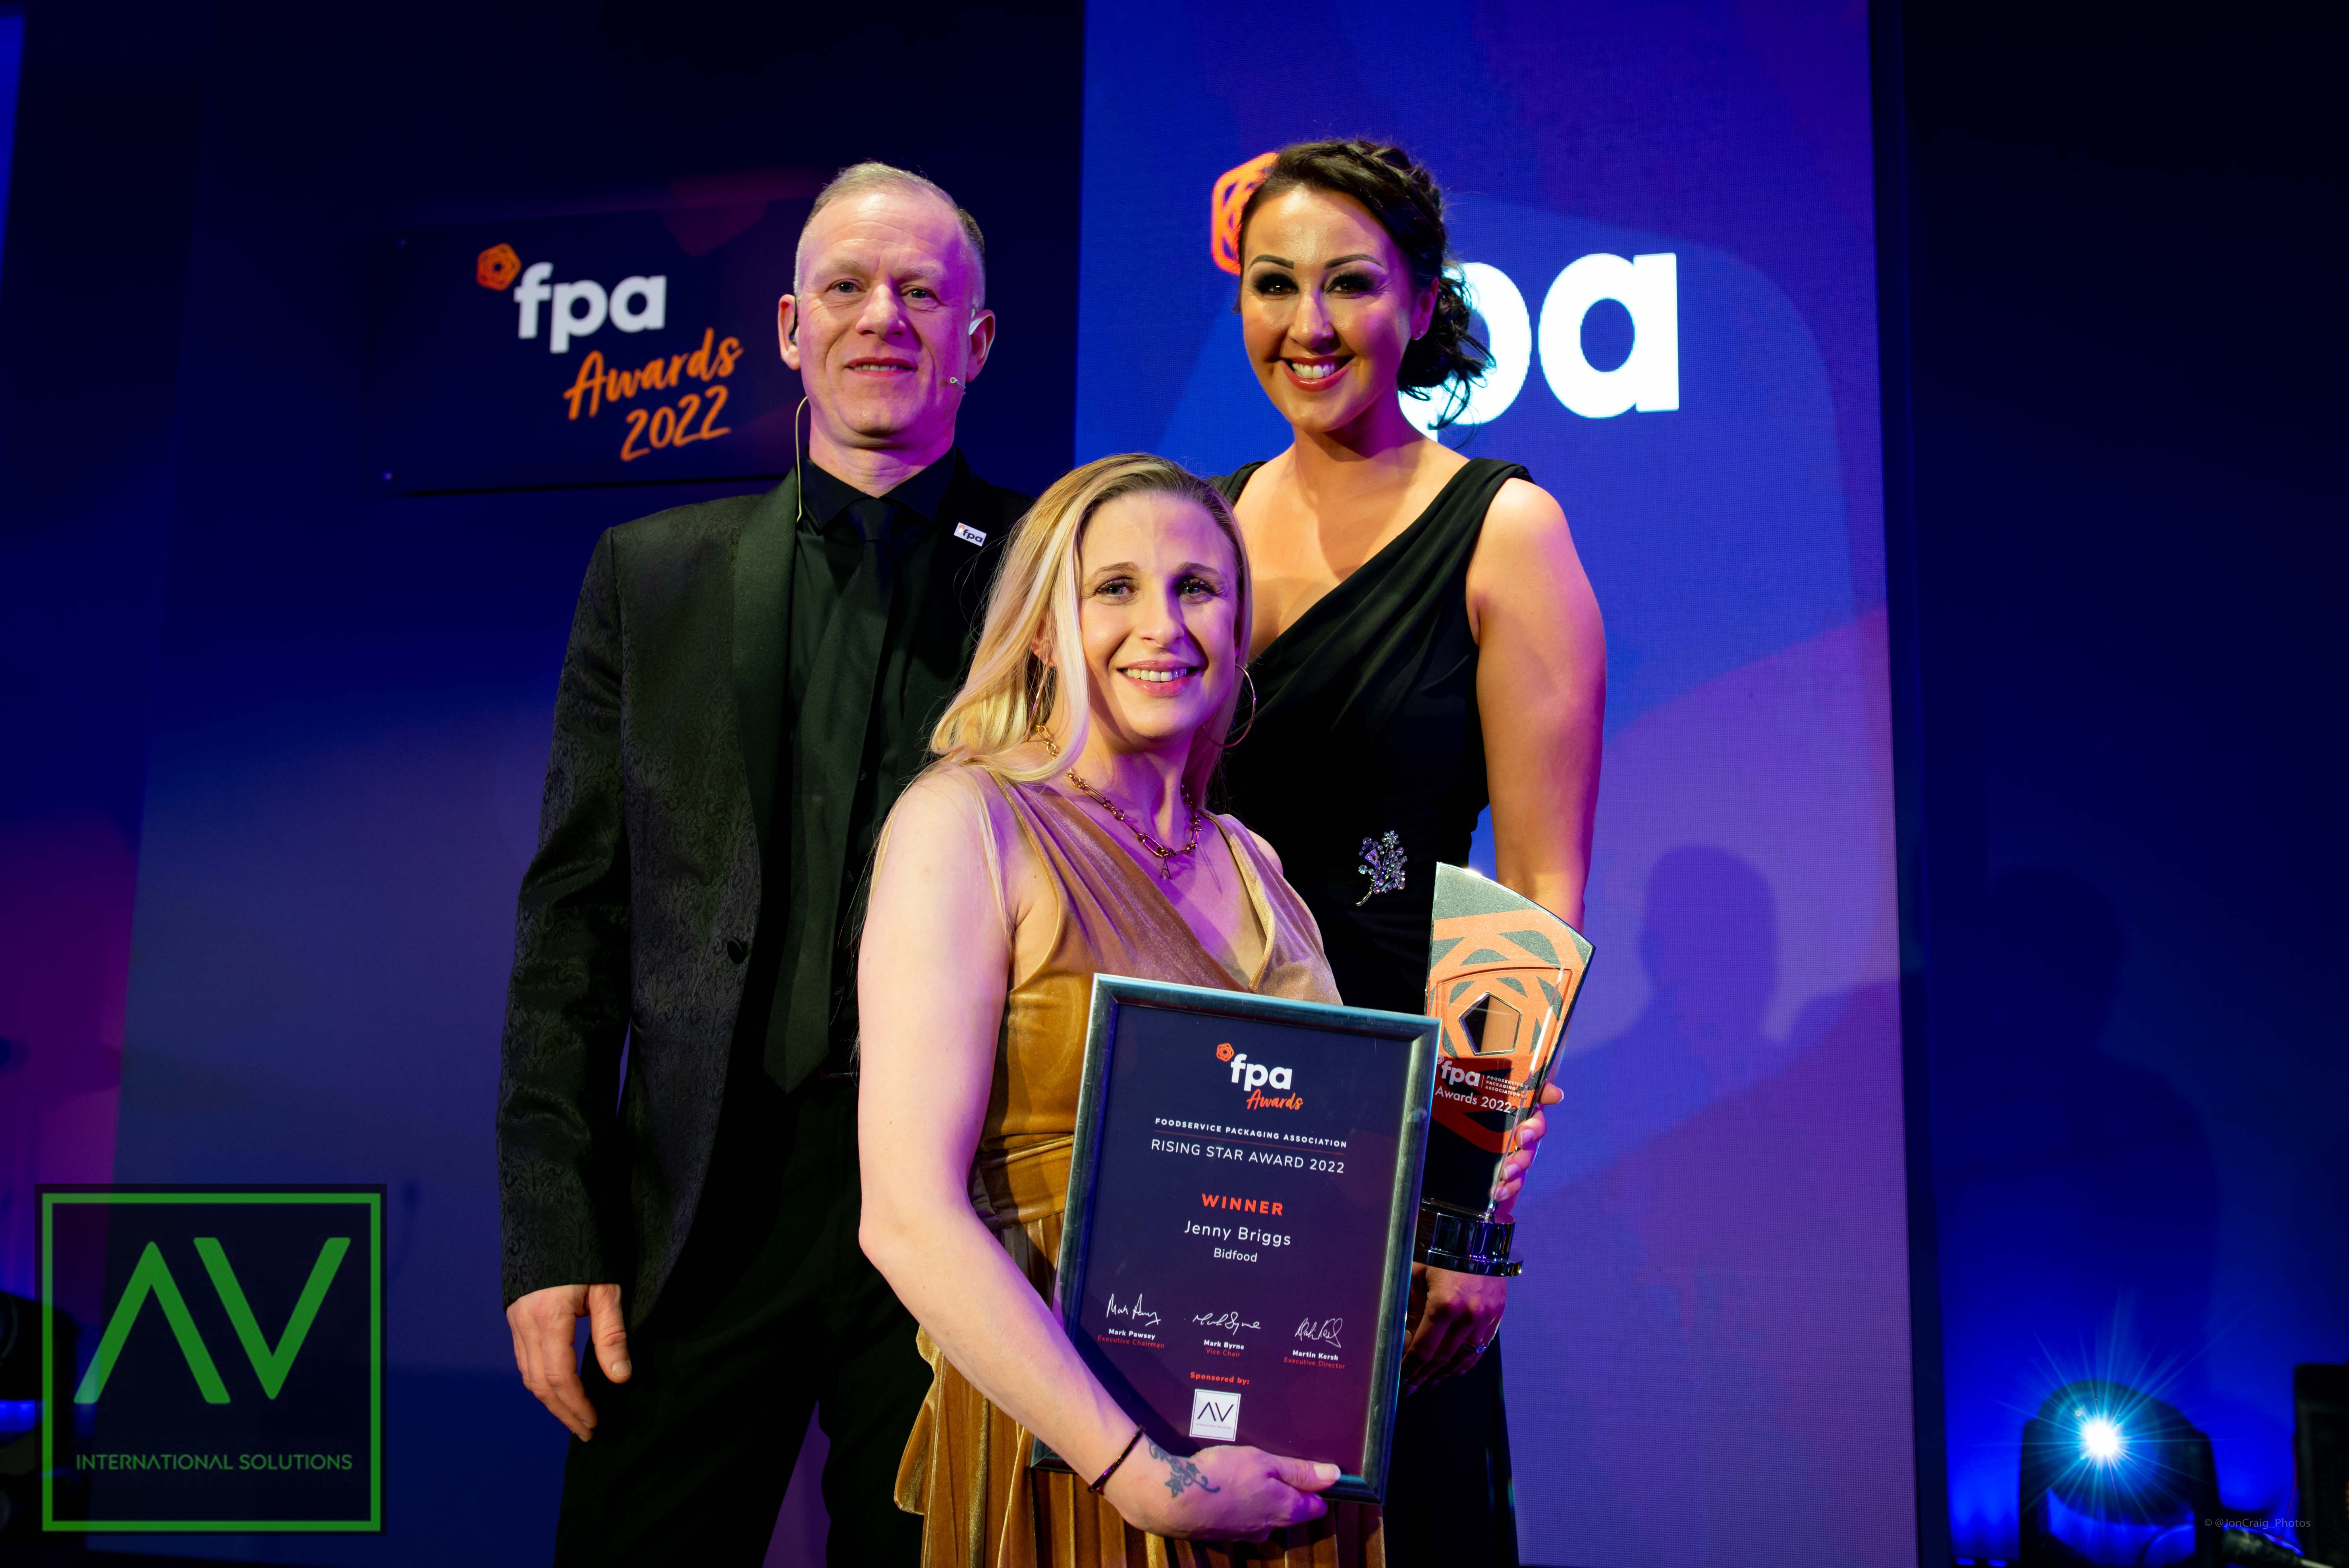 Jenny Briggs of Bidfood and the FPA's 2022 Rising Star Award winner